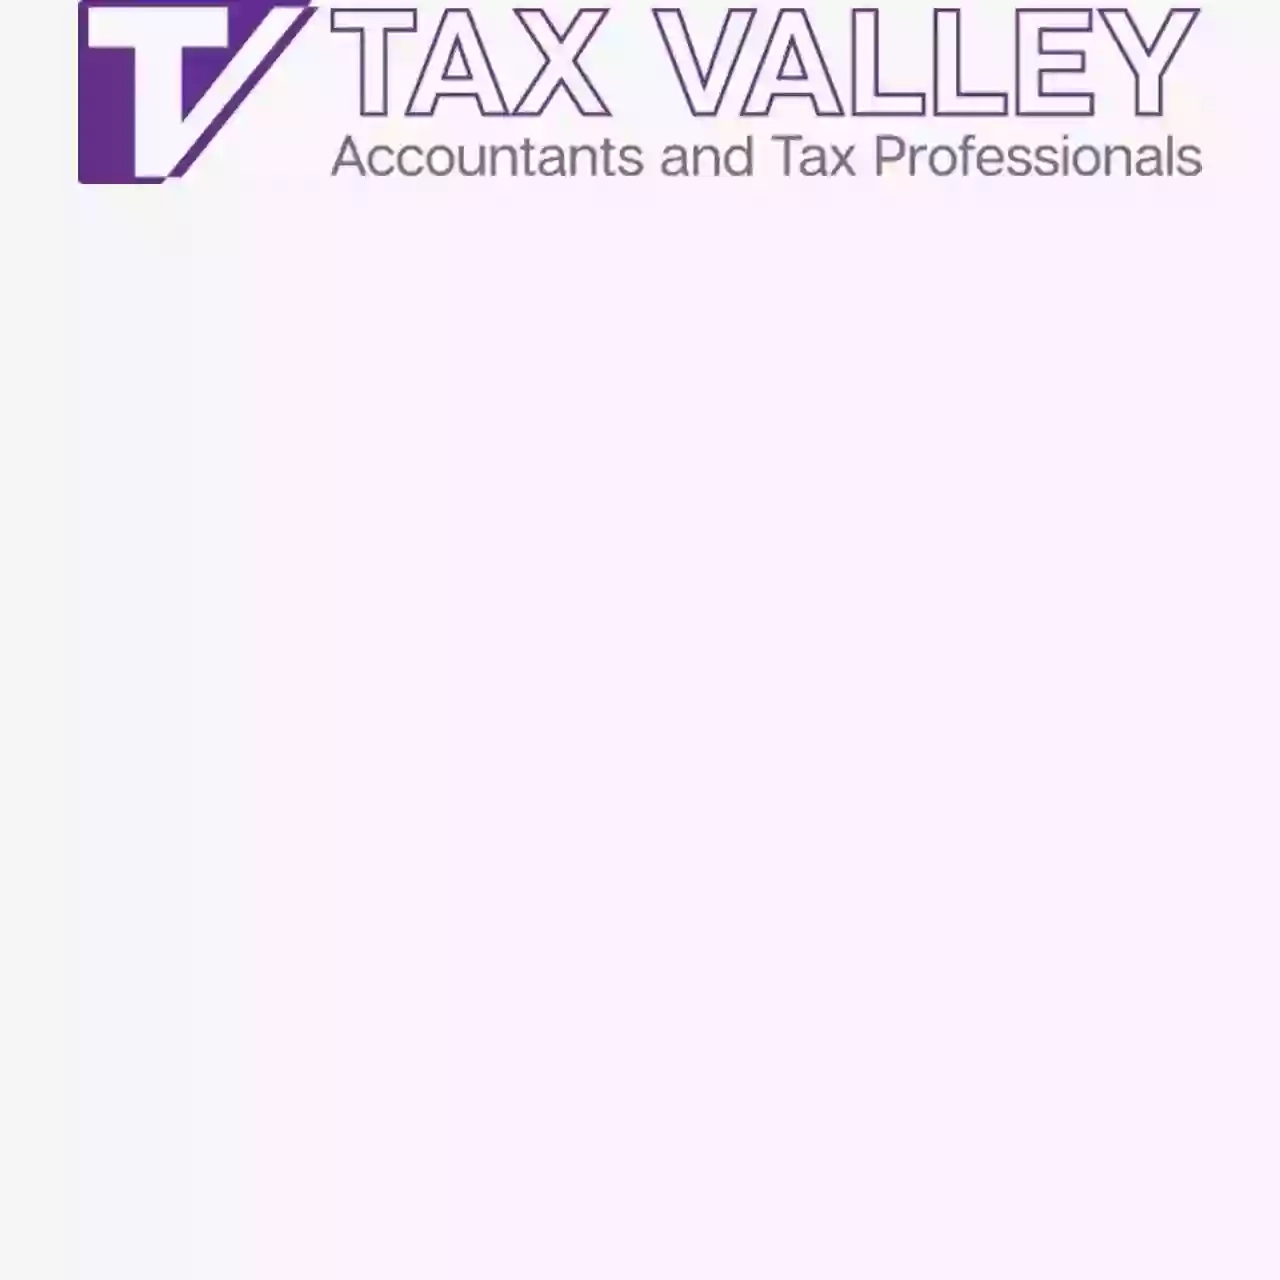 Tax Valley Accountants & Tax Professionals